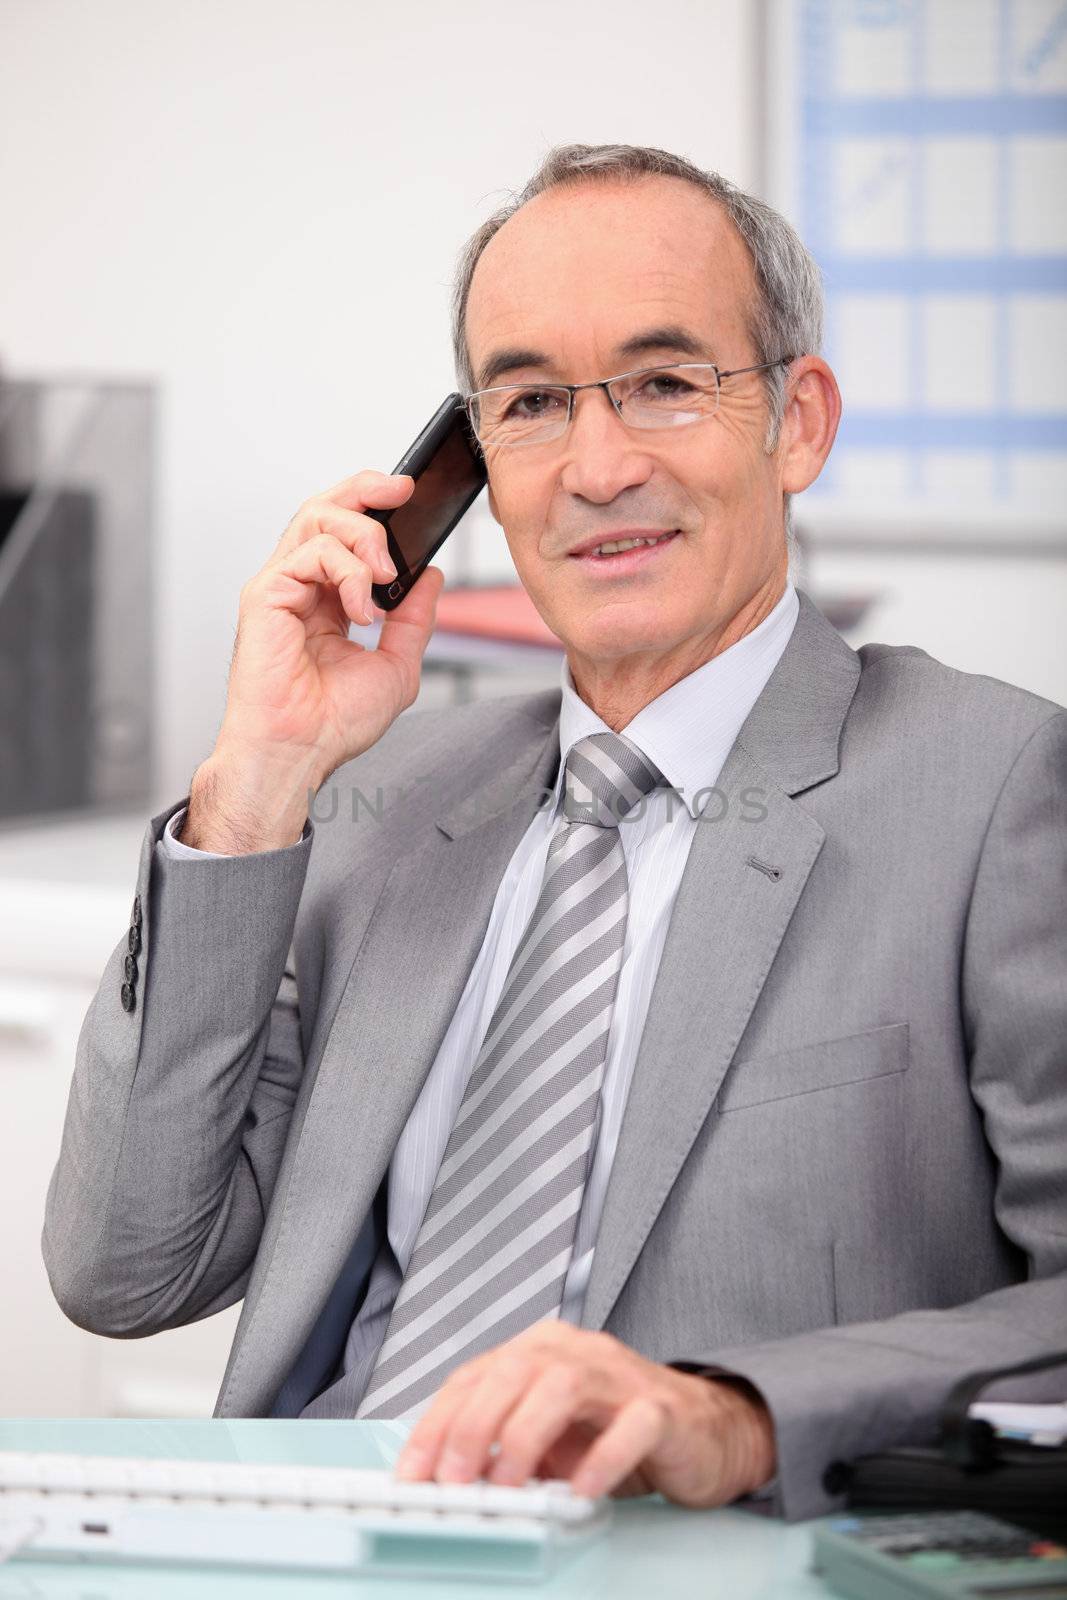 senior businessman on the phone by phovoir